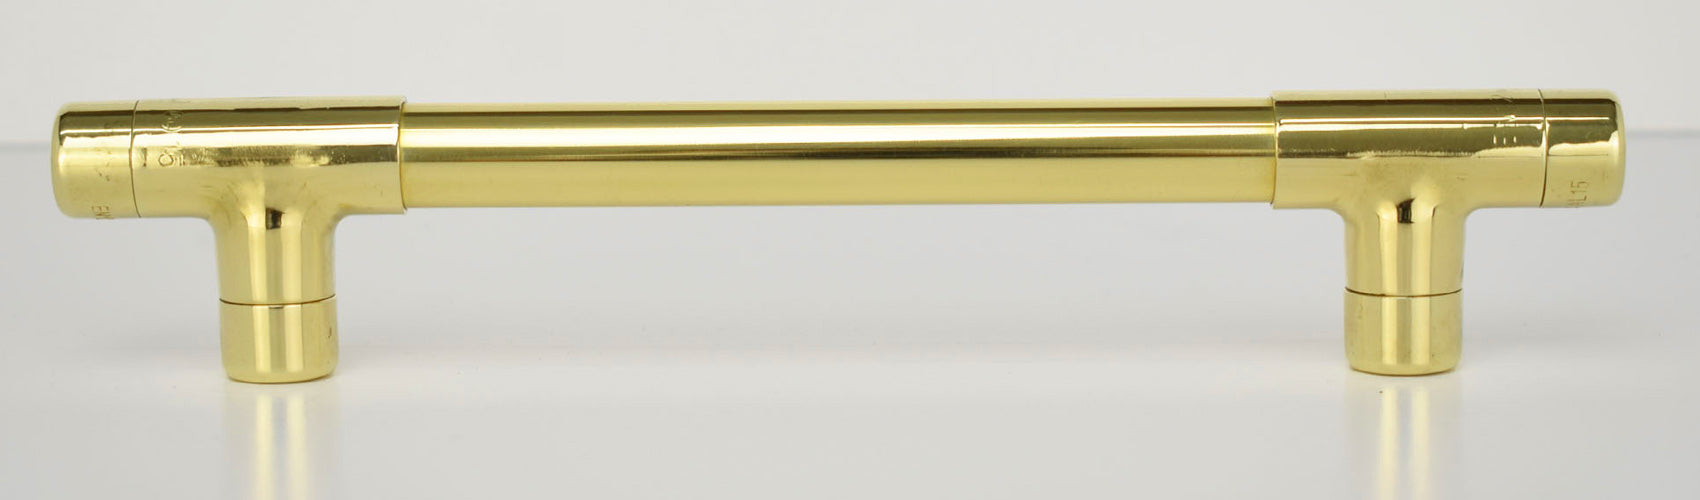 polished brass handles - new kitchen cabinet hardware releases at Proper Copper Design